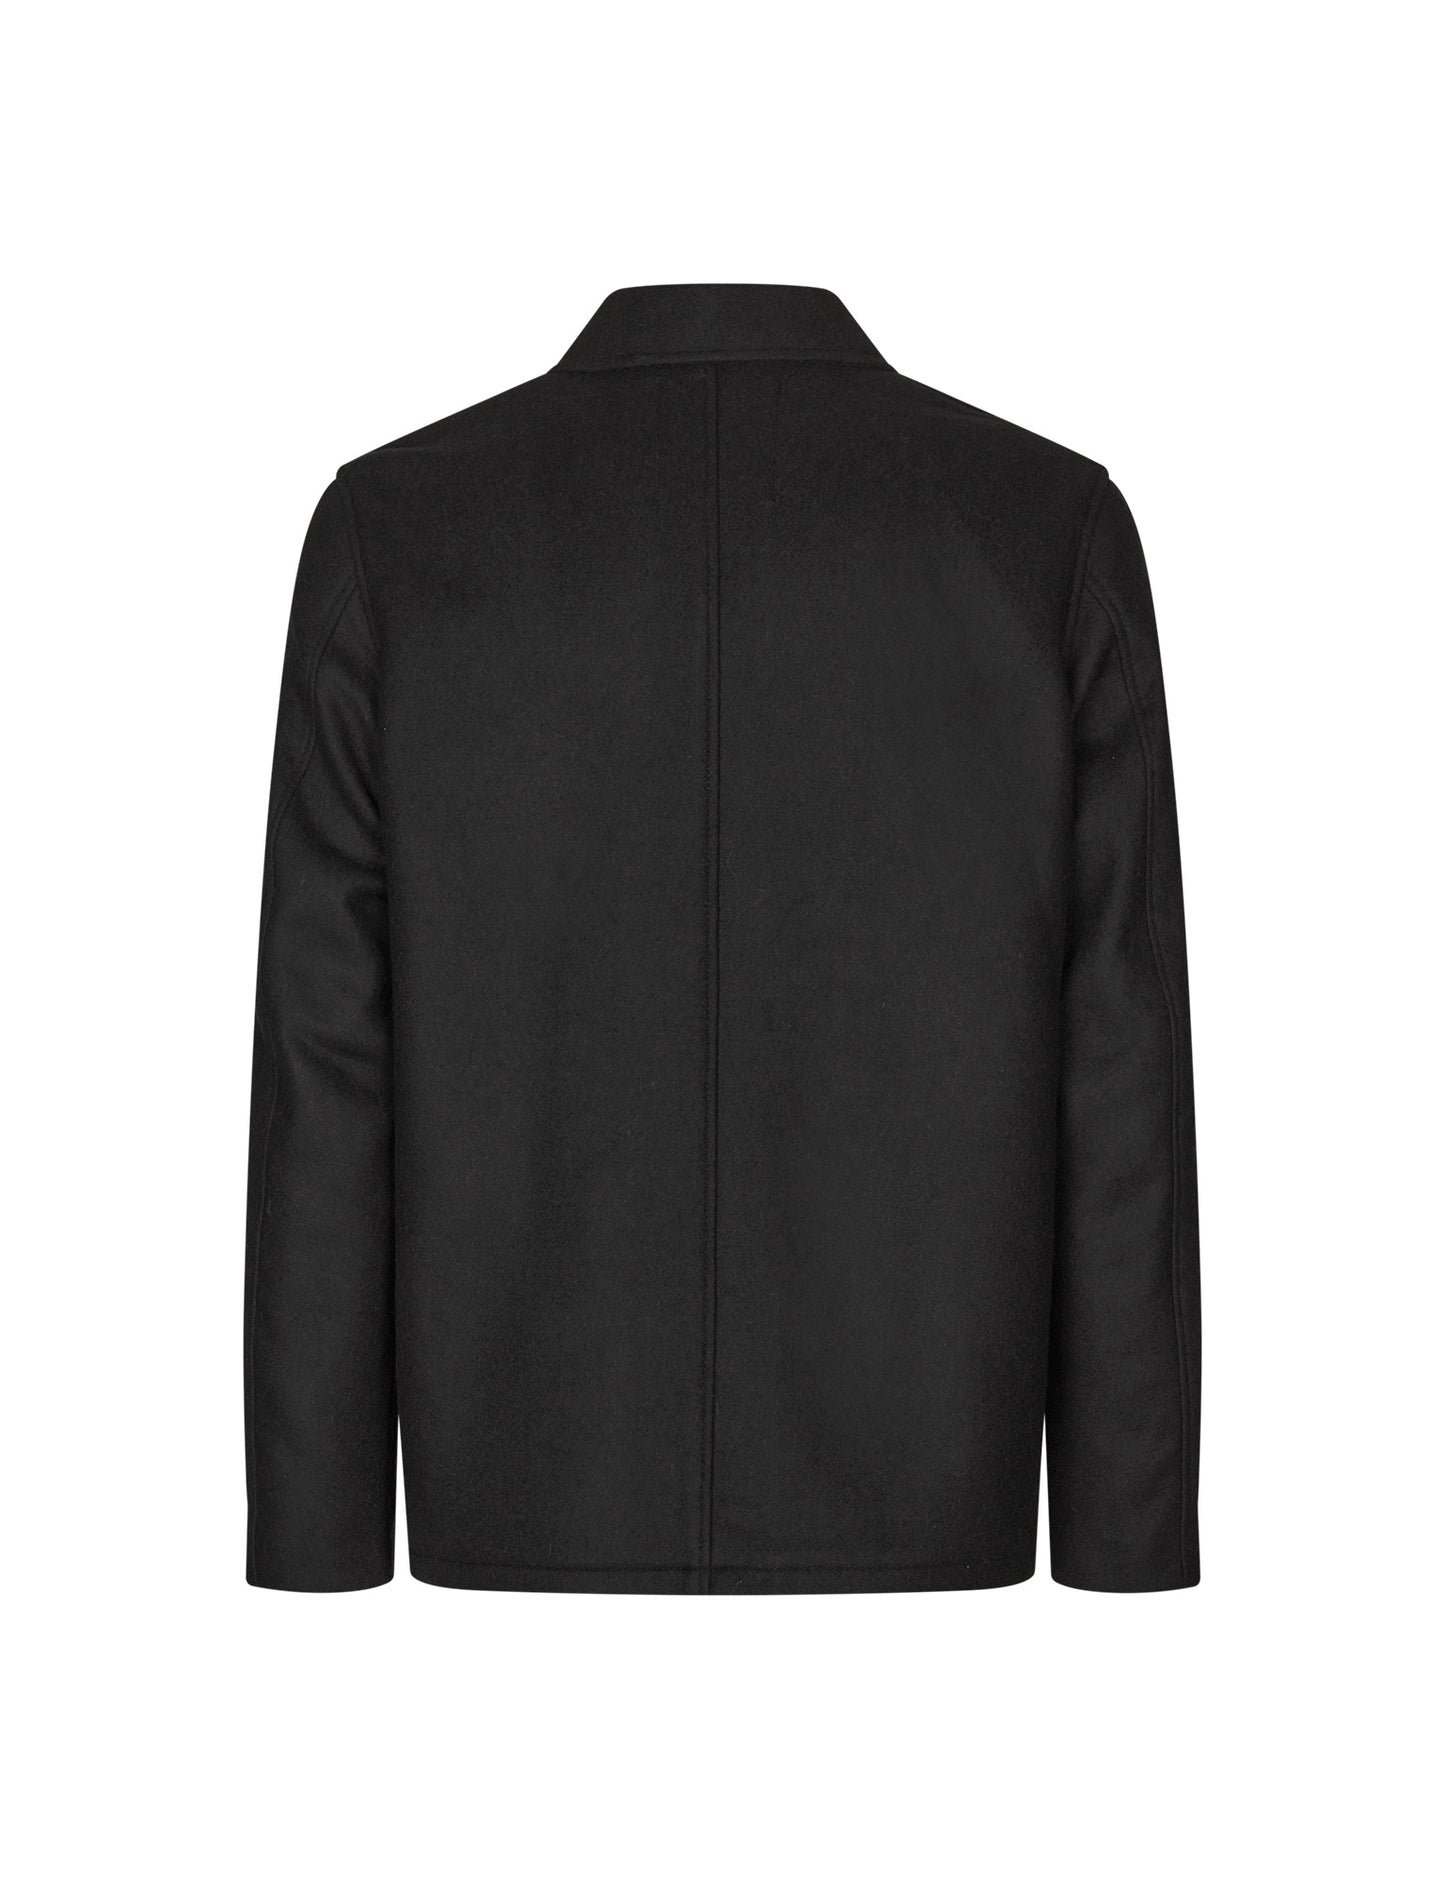 Wool Soft Worker Jacket, Black